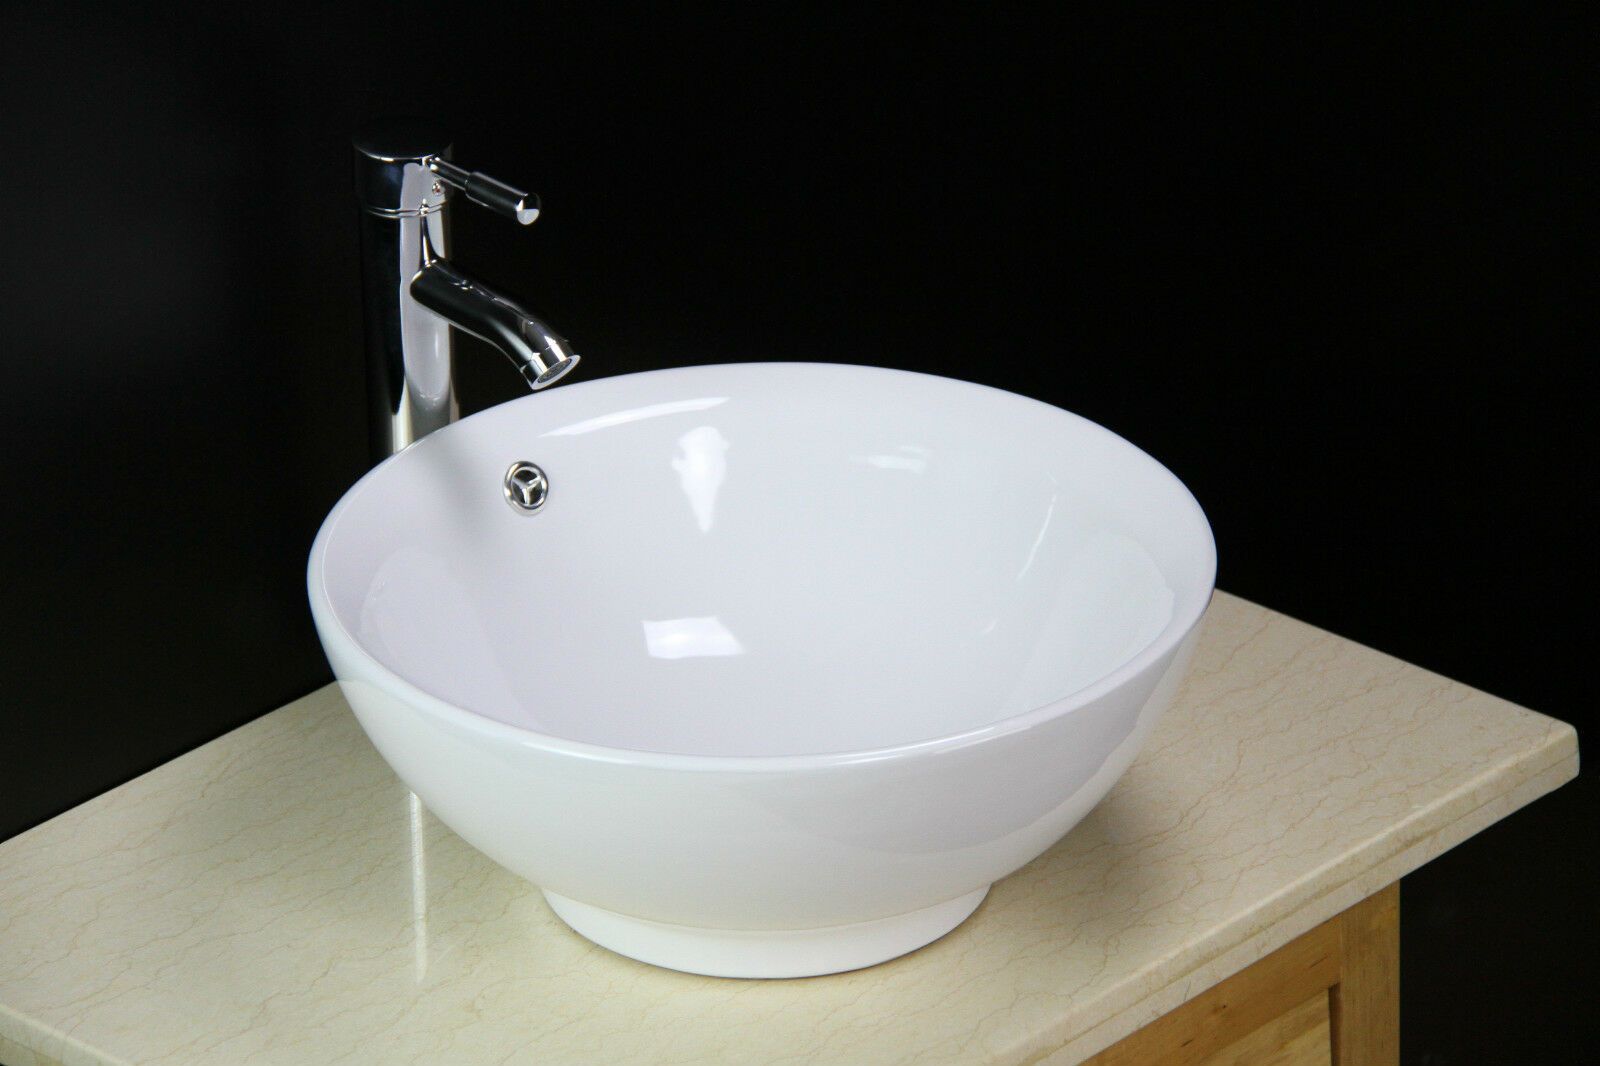 Sink Bowls For Bathroom
 Basin Sink Bowl Countertop Ceramic Bathroom Art Cloakroom